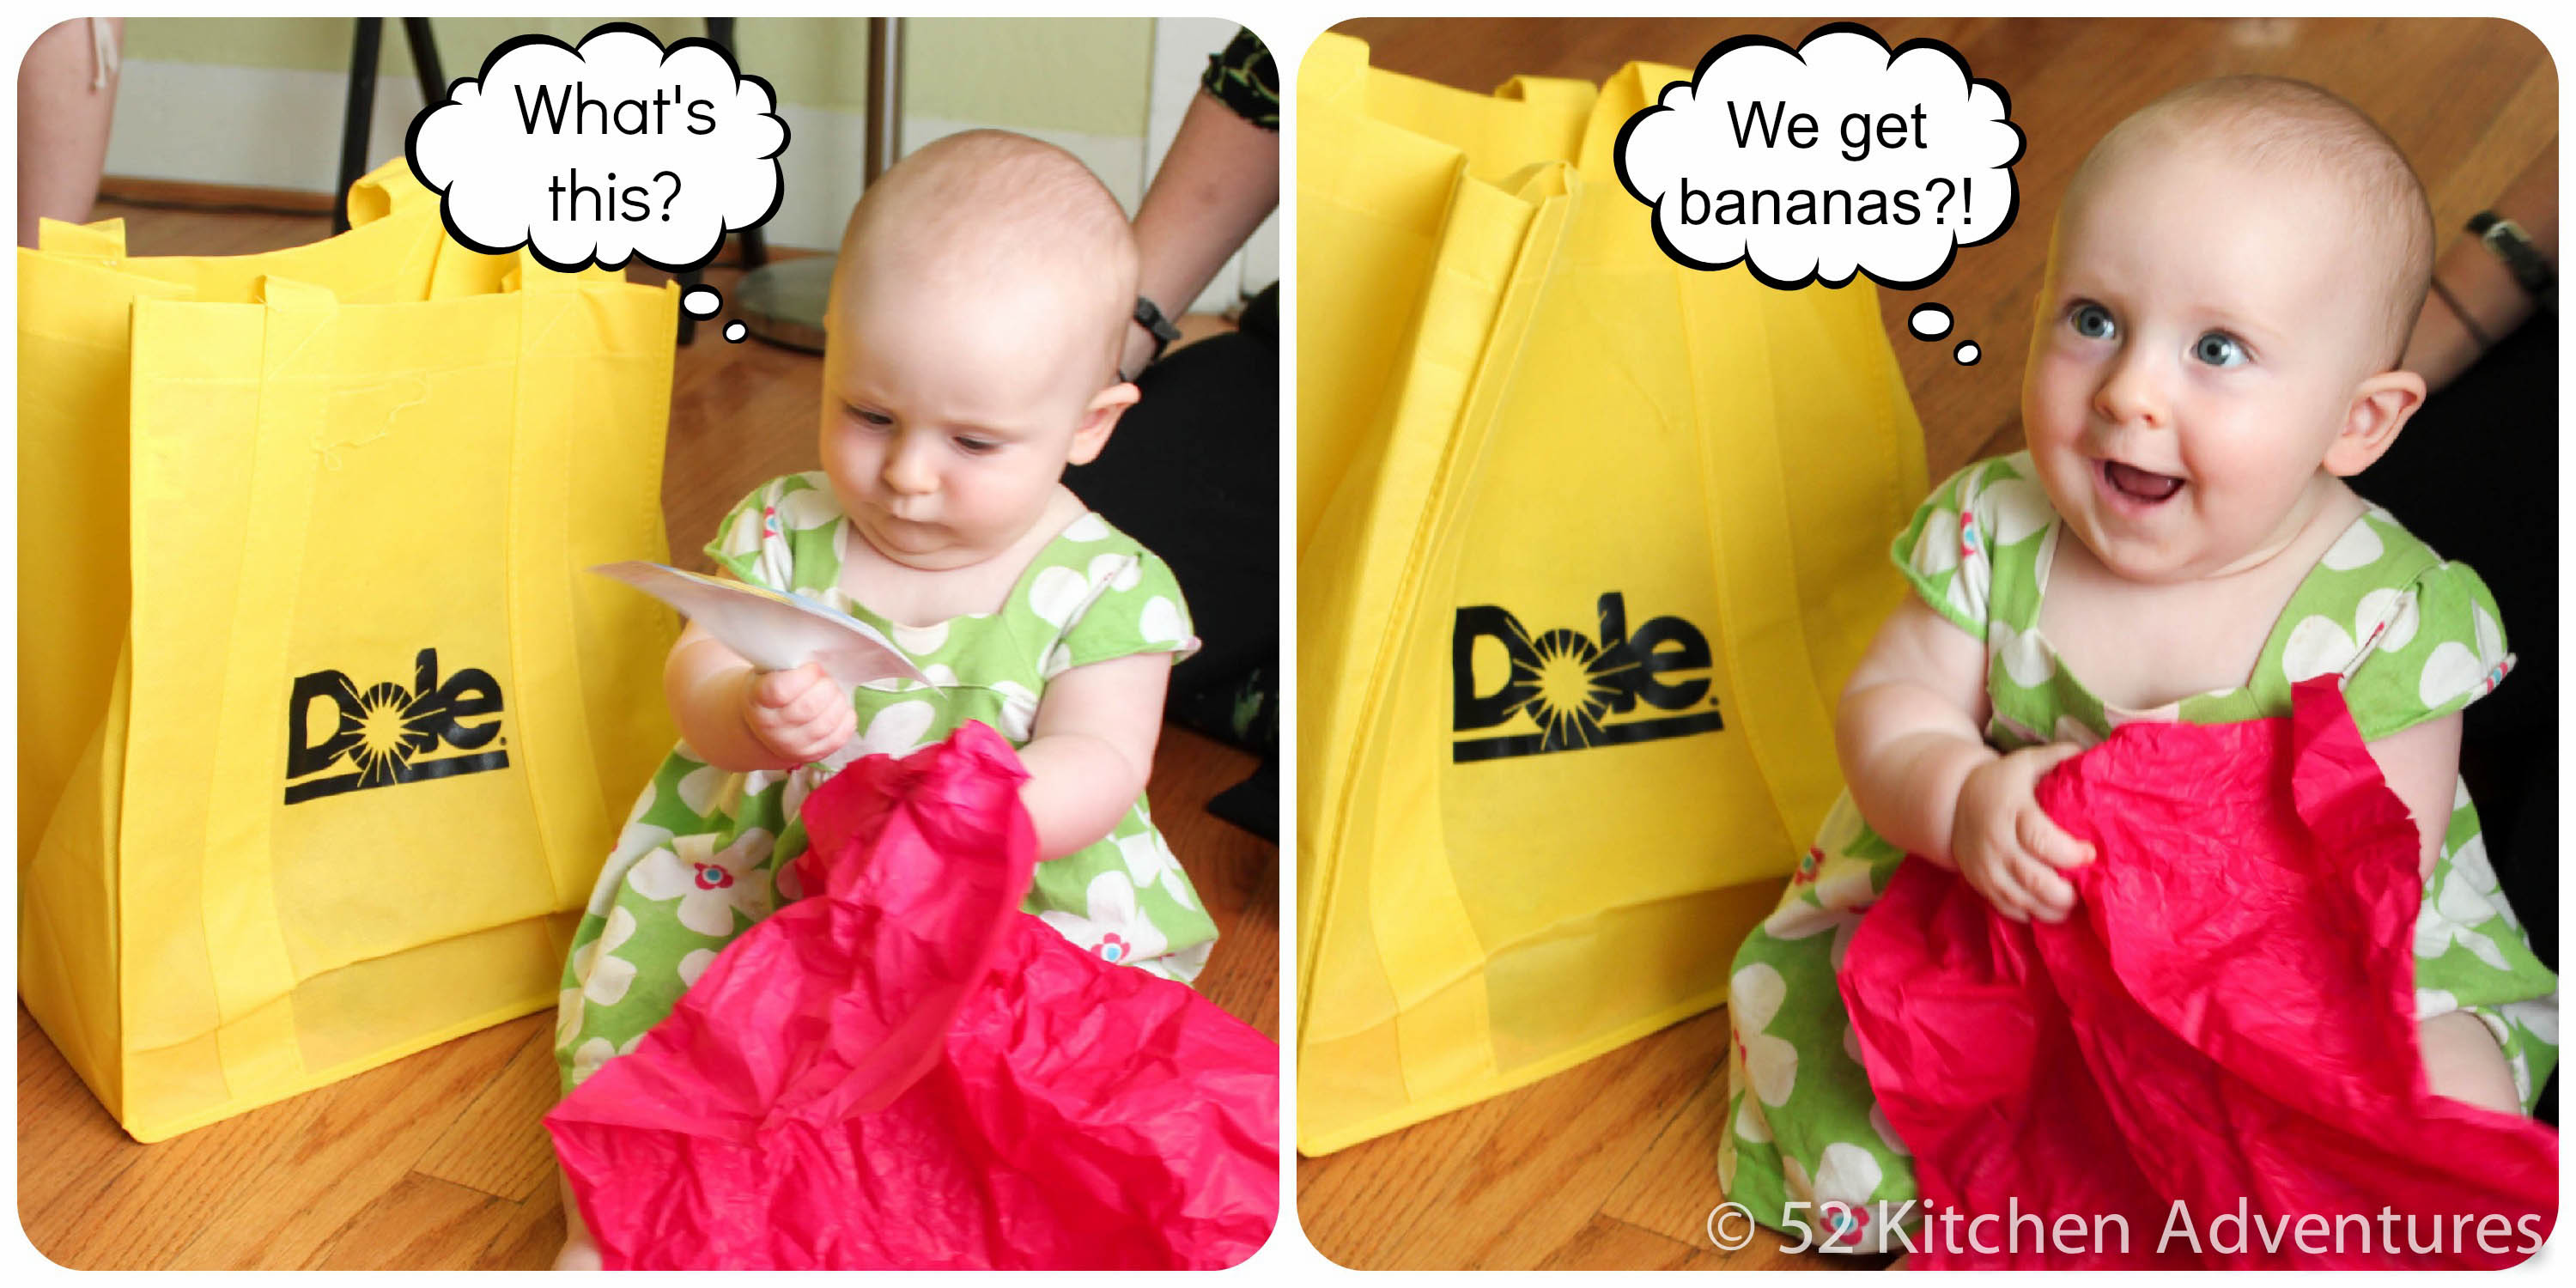 Babies love Dole bananas